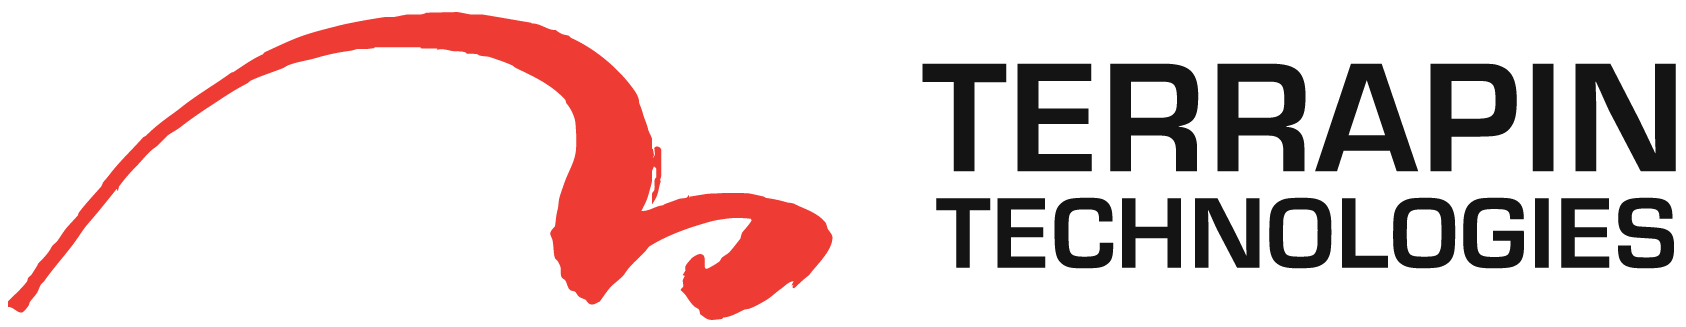 Terrapin Technologies